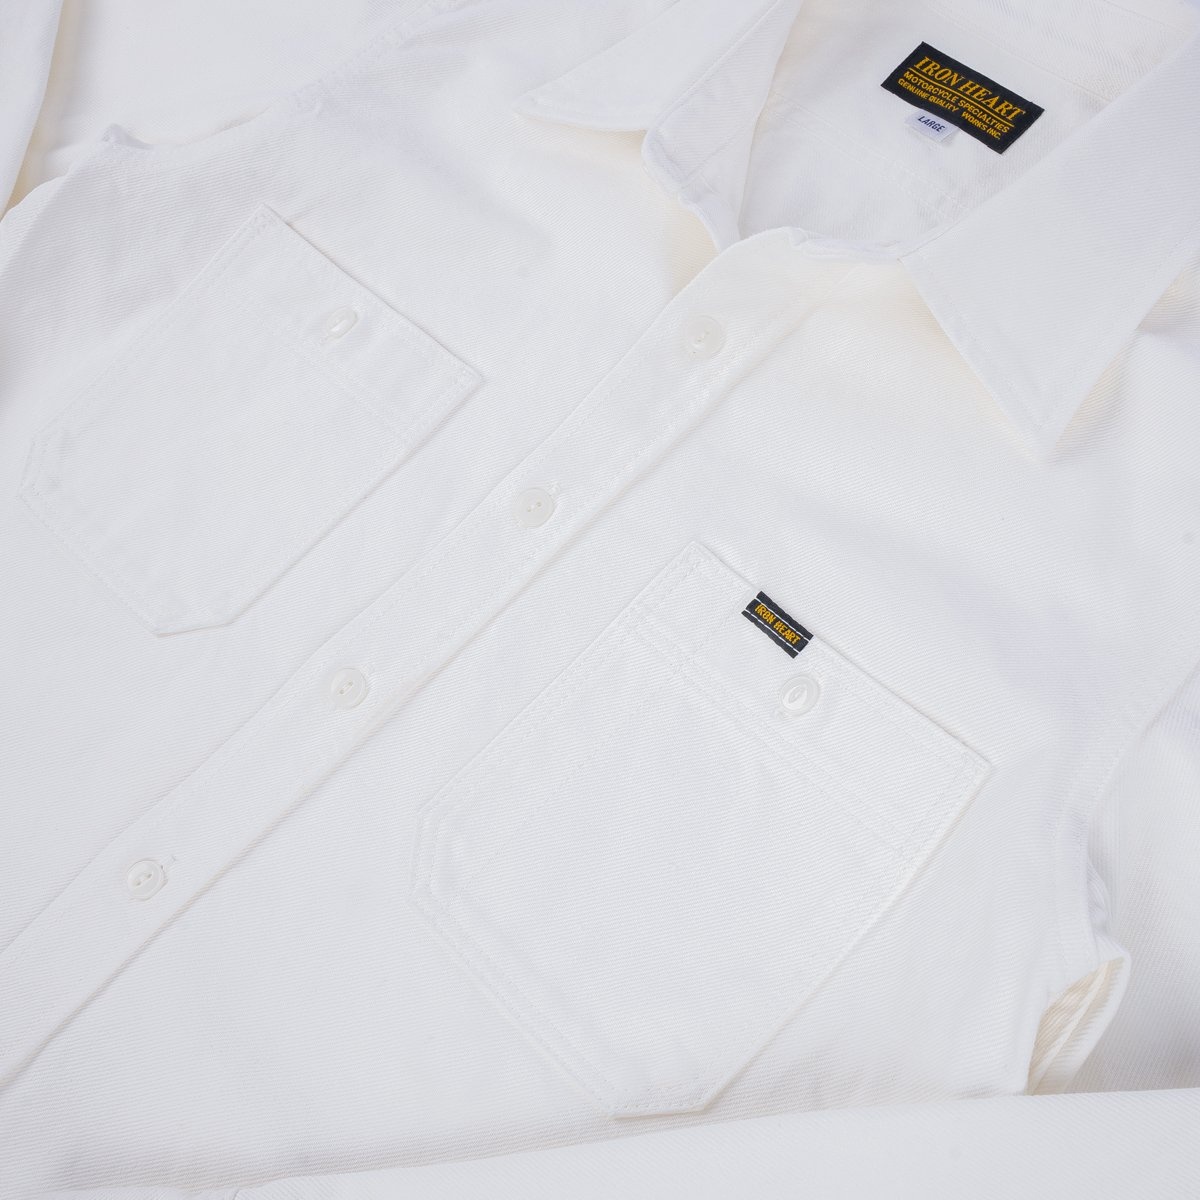 IHSH-391-WHT 13.5oz Denim Work Shirt - White - 10